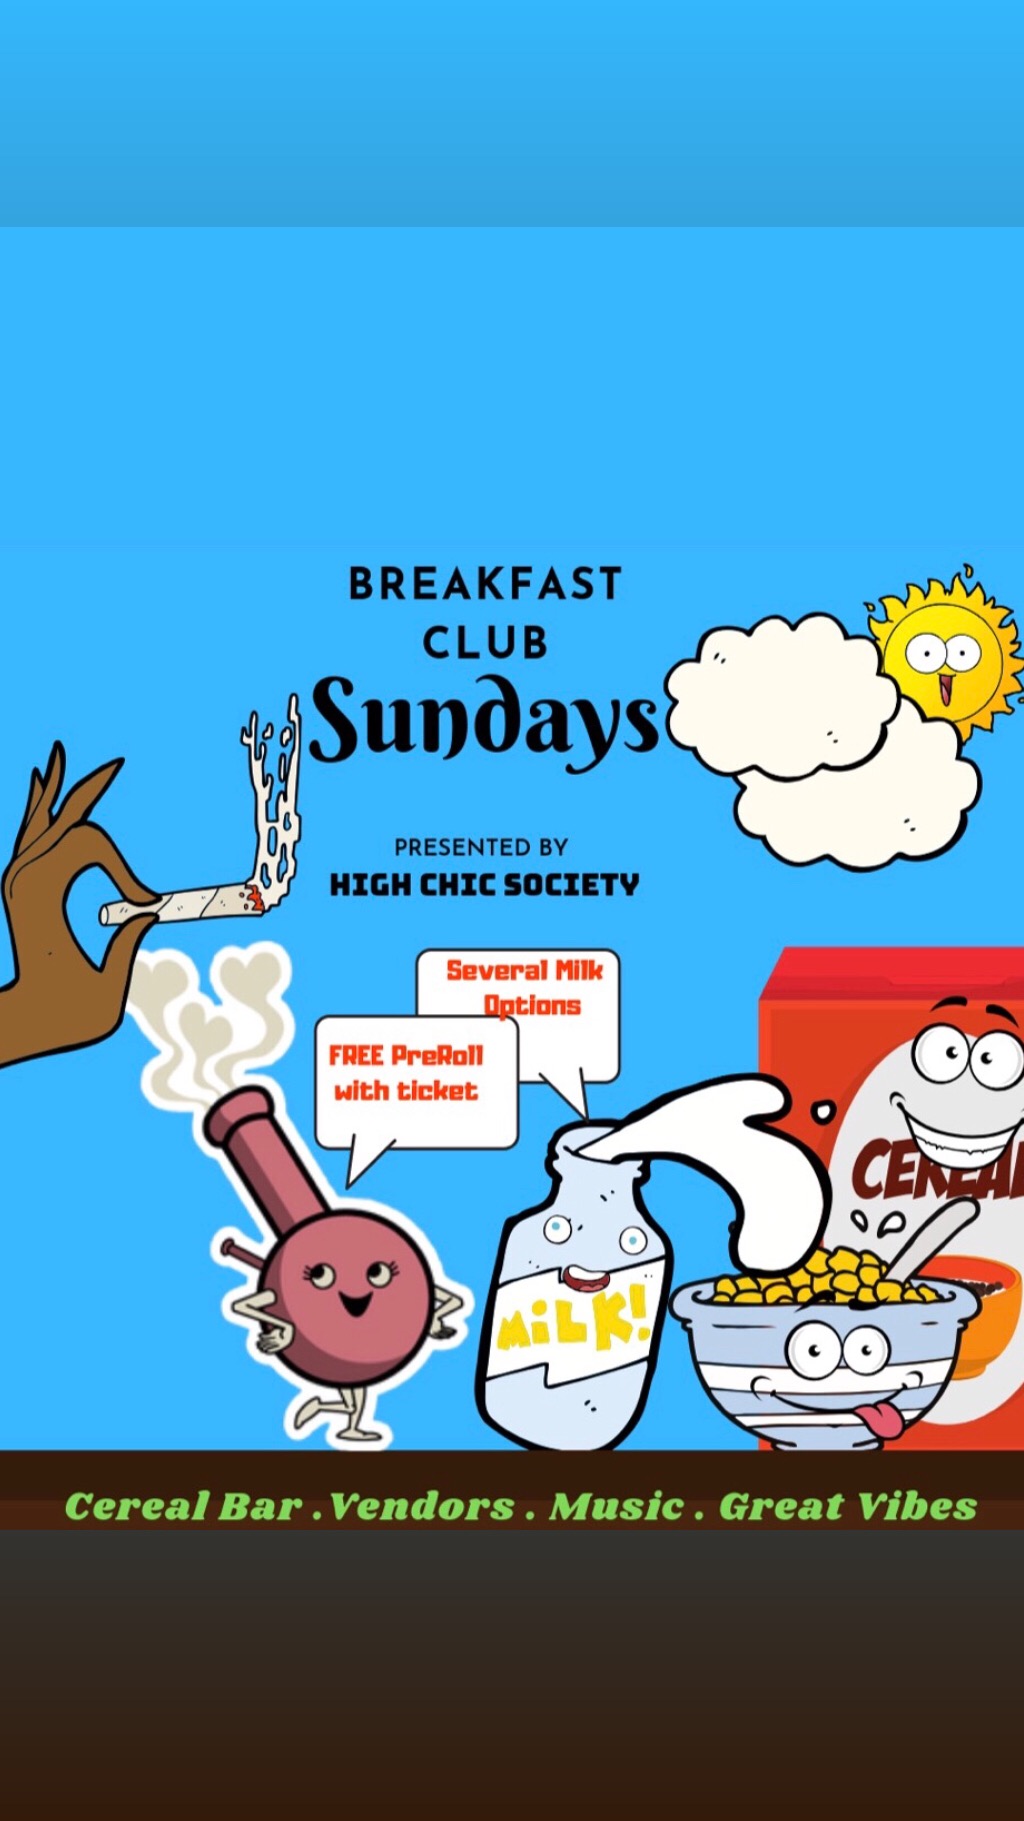 Breakfast Club Sundays 7/28